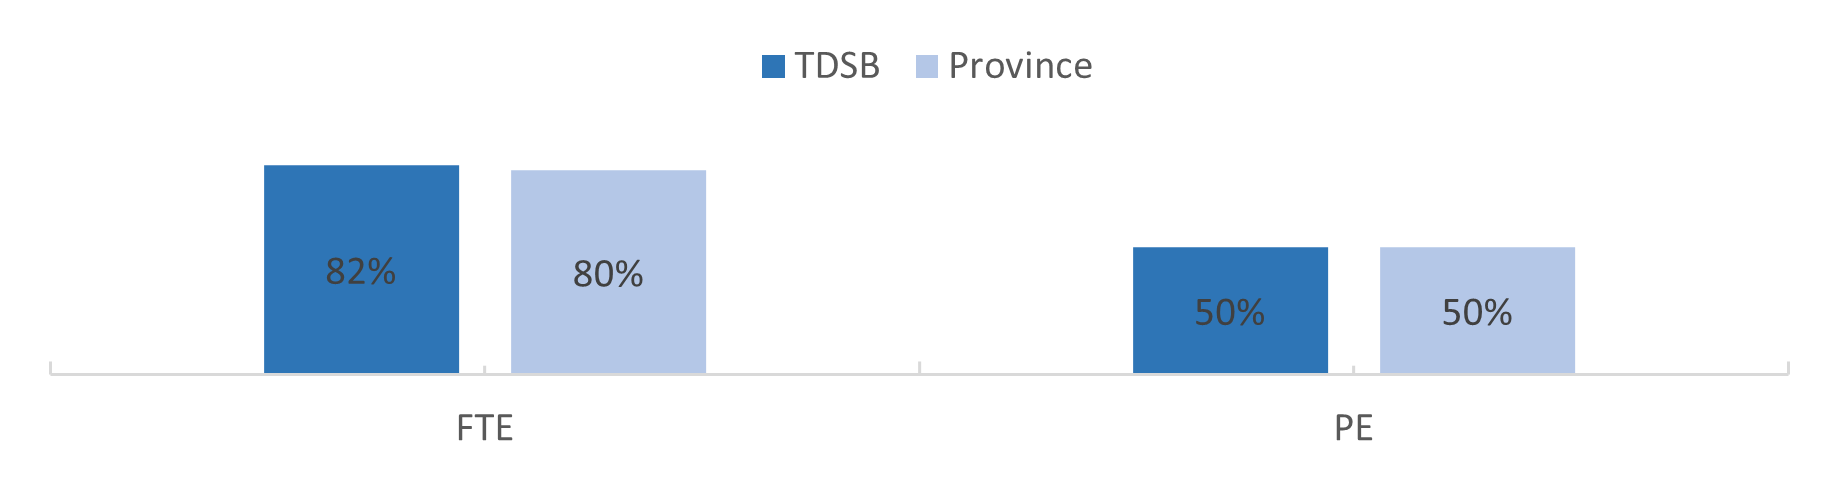 2018-19 bar chart of OSSLT results